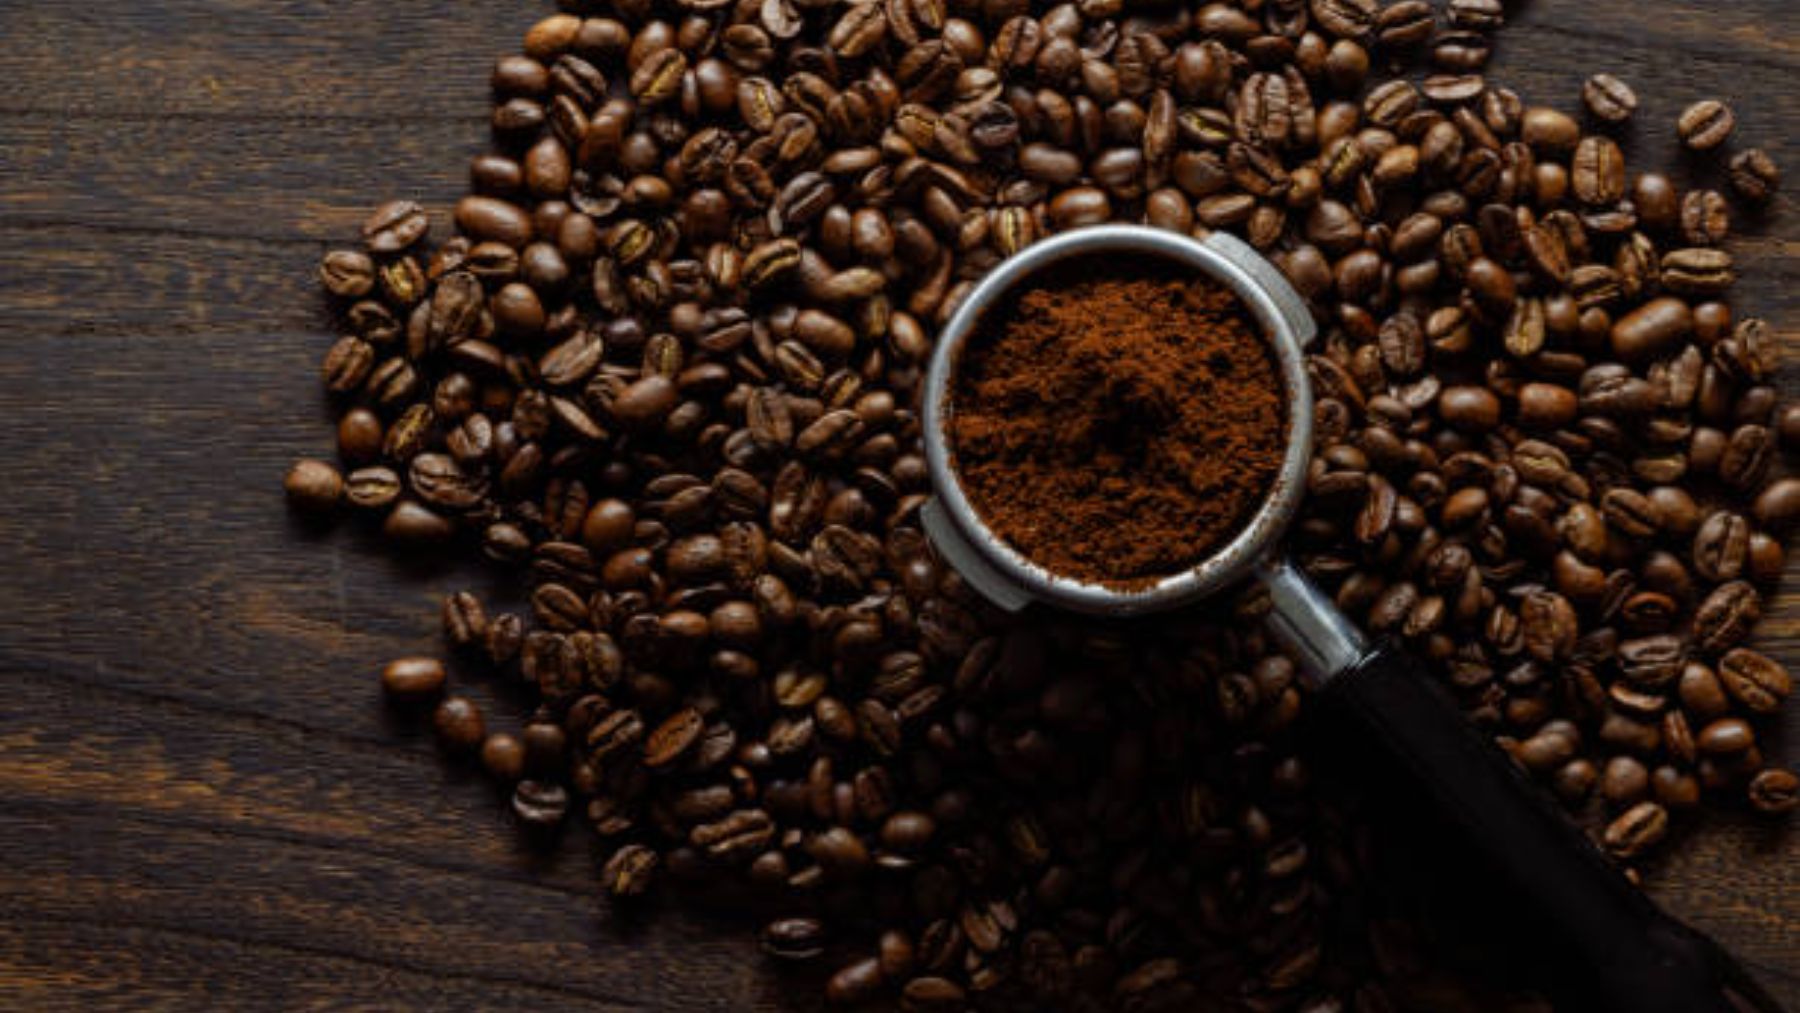 Cápsulas de café o café molido: ¿cuál es más sano?